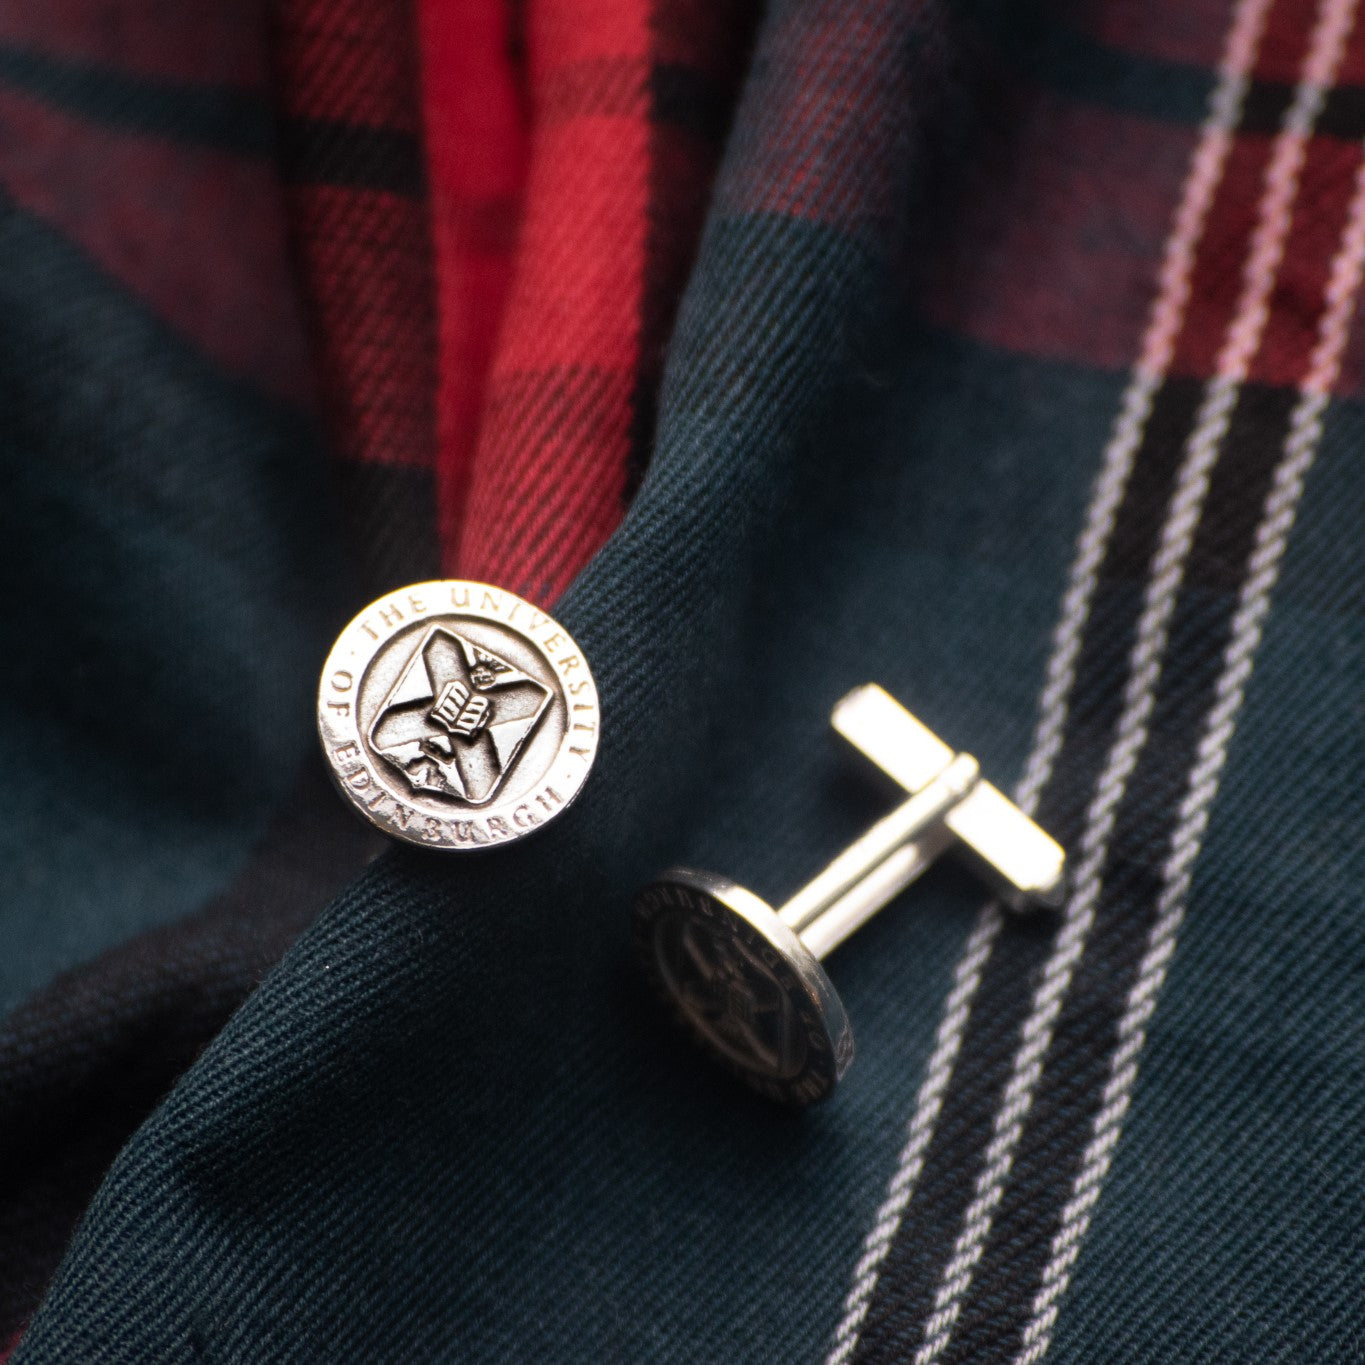 Our Silver University Crest Cufflinks on a University Tartan background.